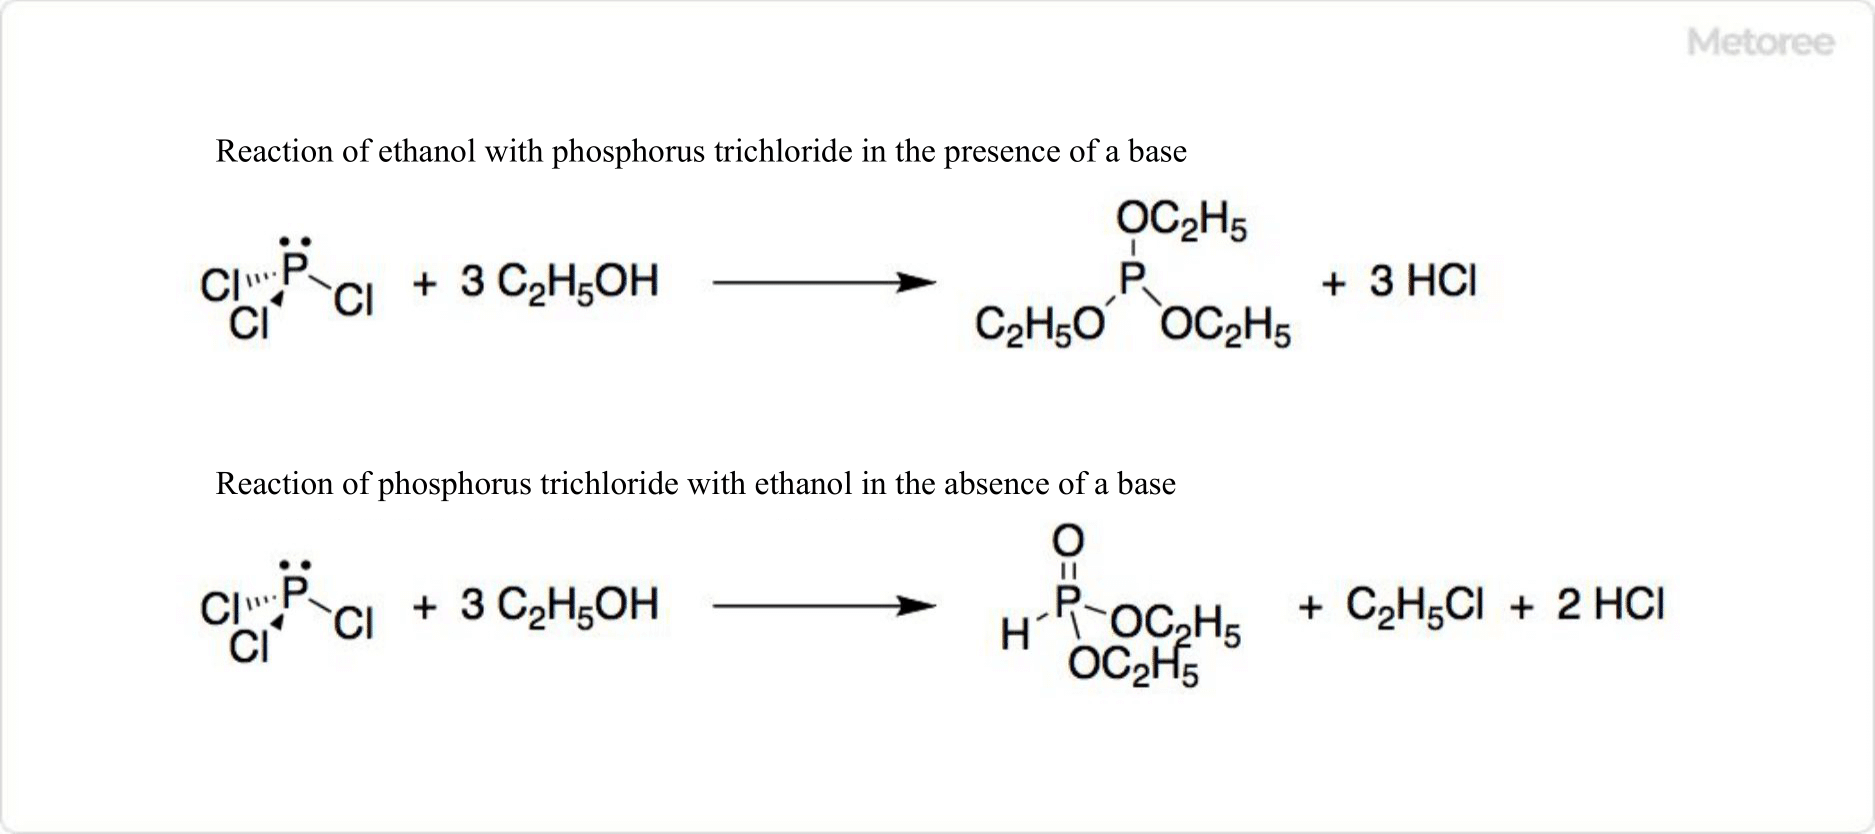 Figure 3. Reaction of phosphorus trichloride